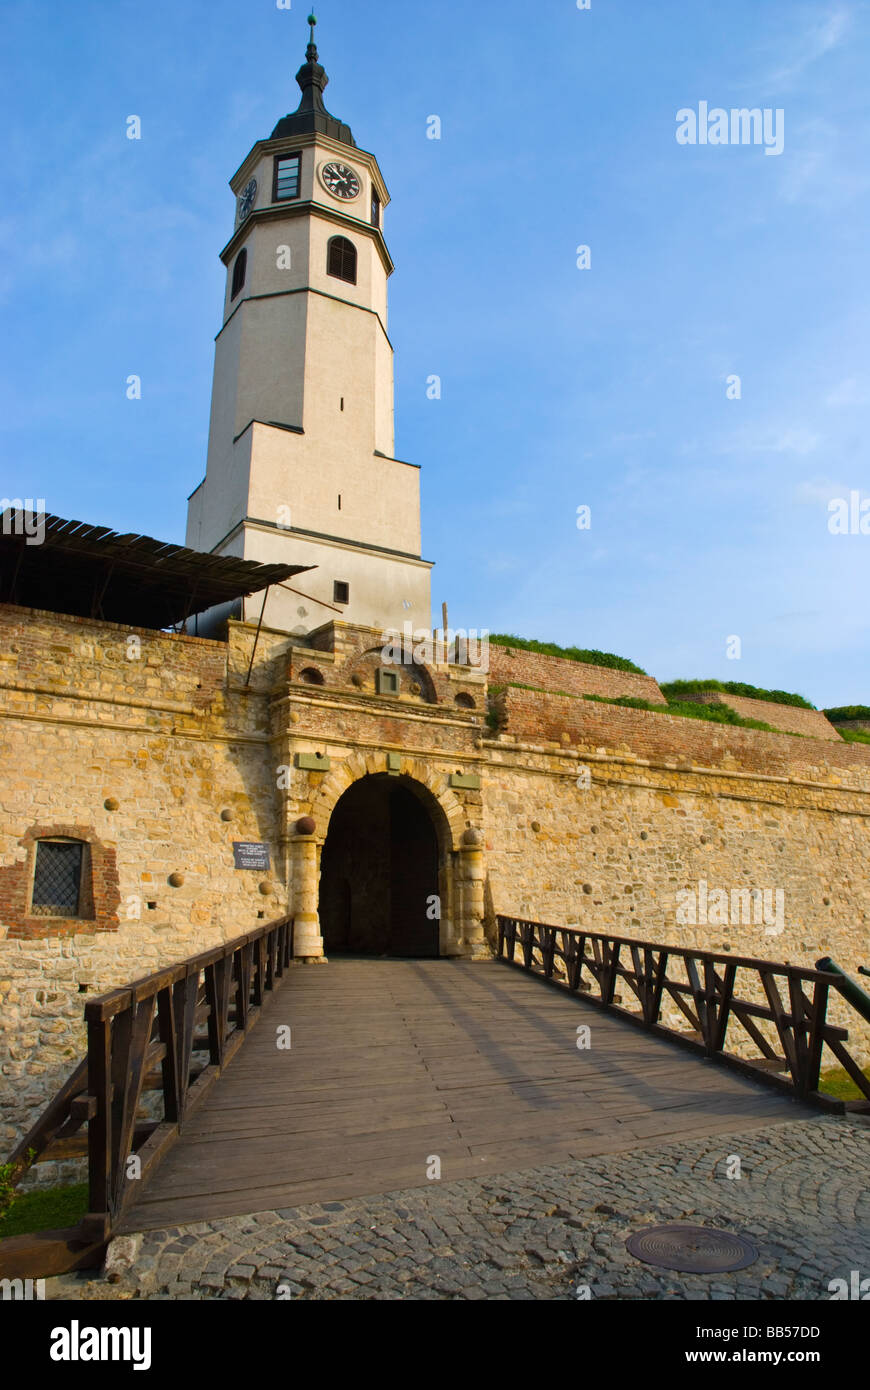 Sahat tower the Clock tower at Kalemegdan fortress in Belgrade Serbia Europe Stock Photo